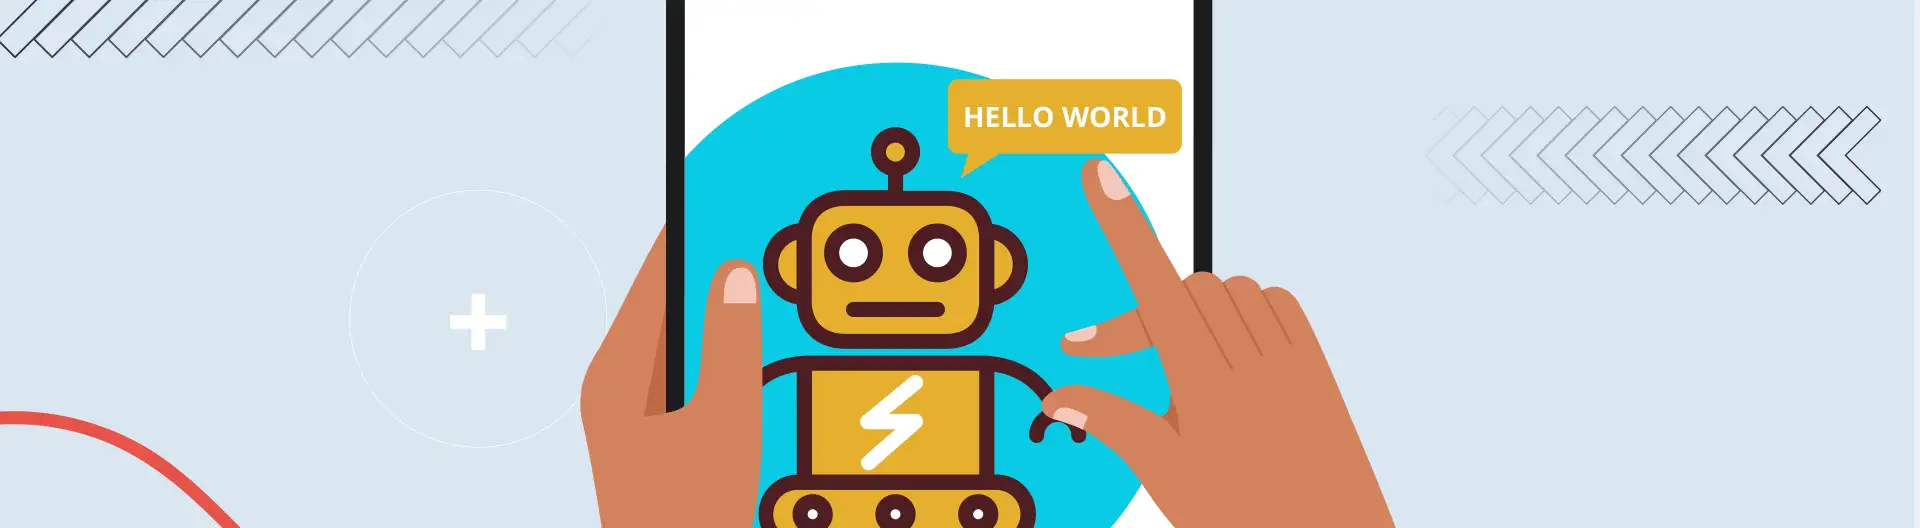 Infopulse-Team entwickelt einen Chatbot-Assistenten beim KI-Frühlings-Hackathon - Banner